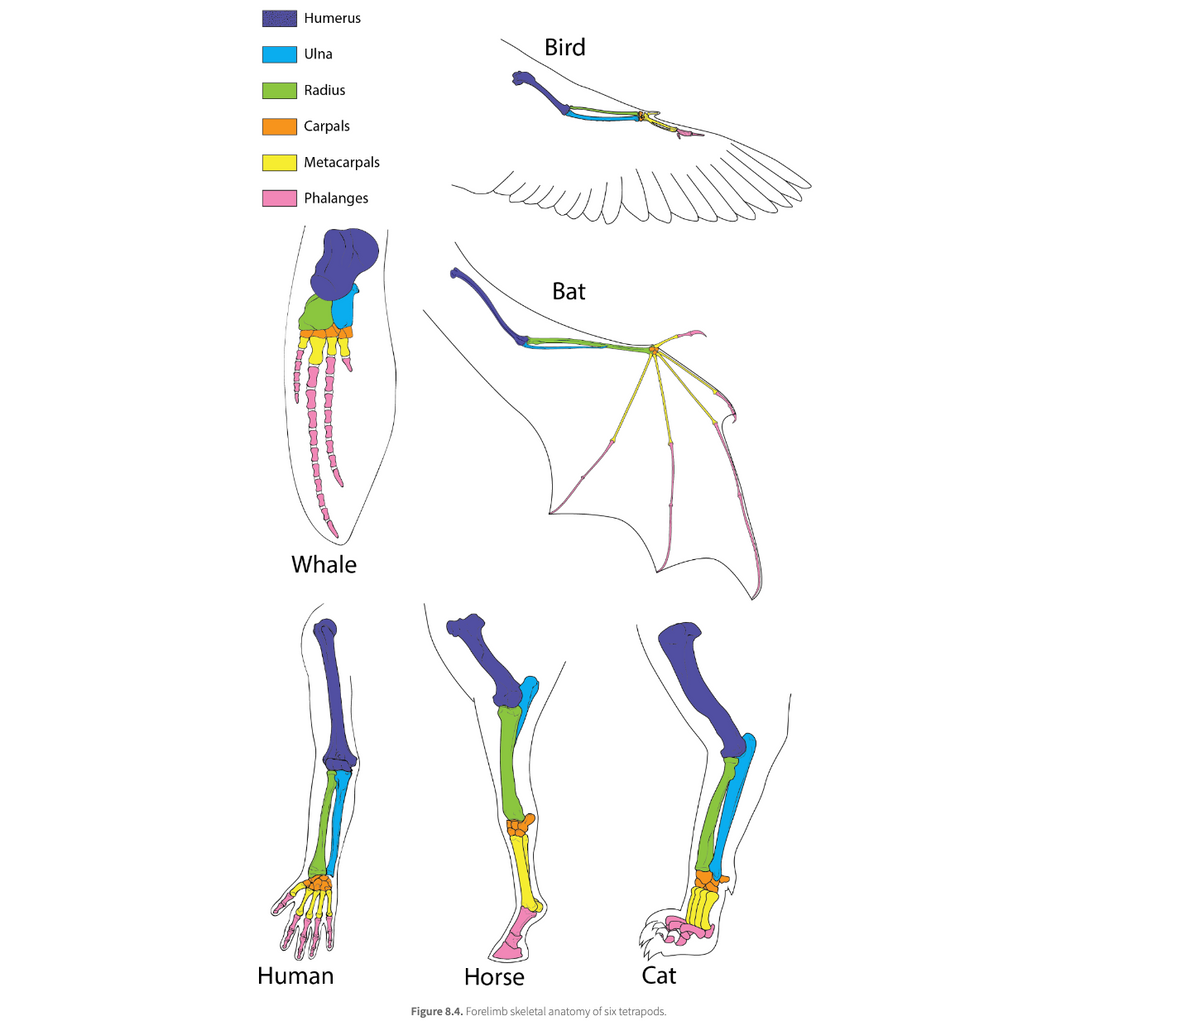 Humerus
Ulna
Radius
Carpals
Metacarpals
Phalanges
Whale
Human
سد
Bird
Bat
Cat
Horse
Figure 8.4. Forelimb skeletal anatomy of six tetrapods.